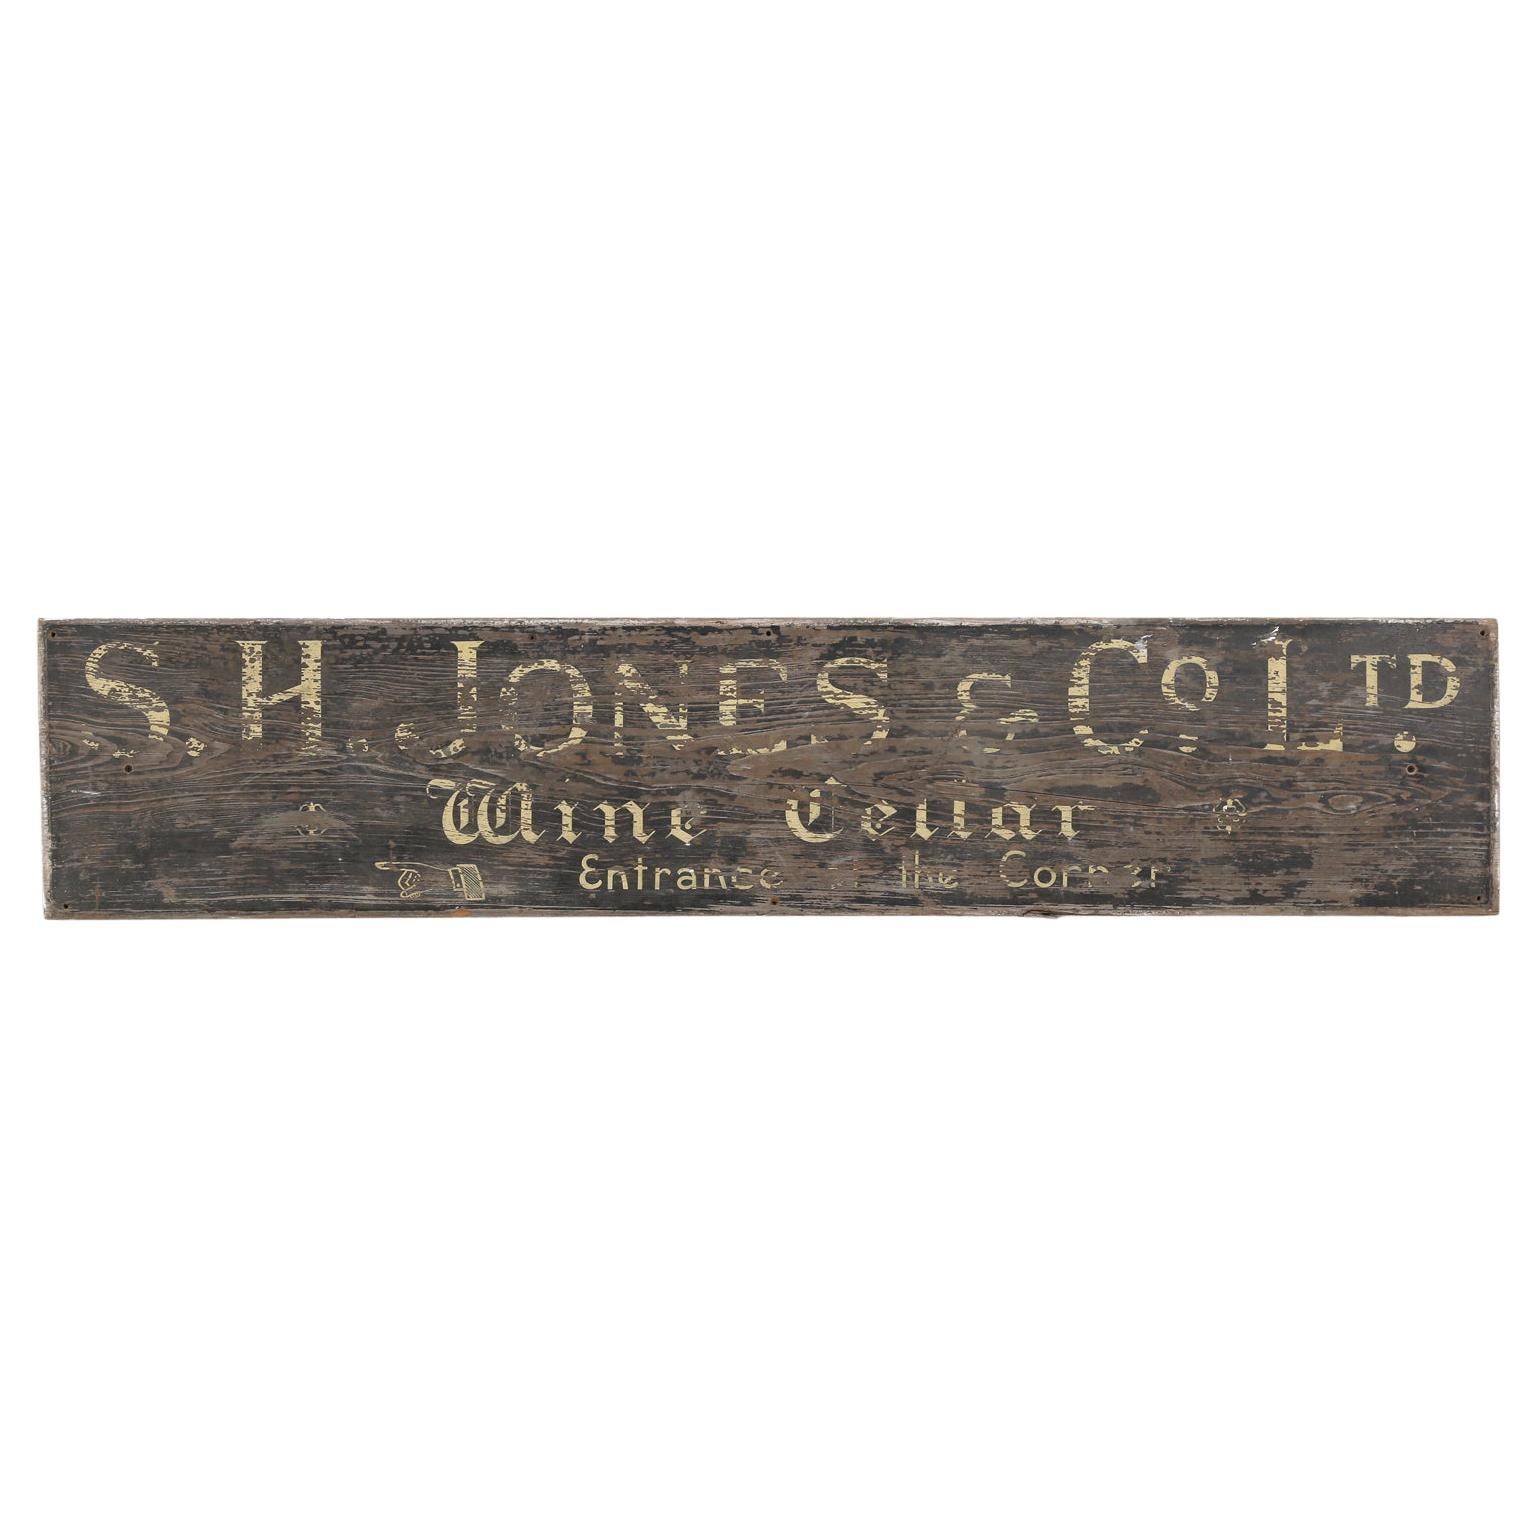 Original Paint Wine Cellar Sign English S.H. Jones Opened 1848 Still in Business